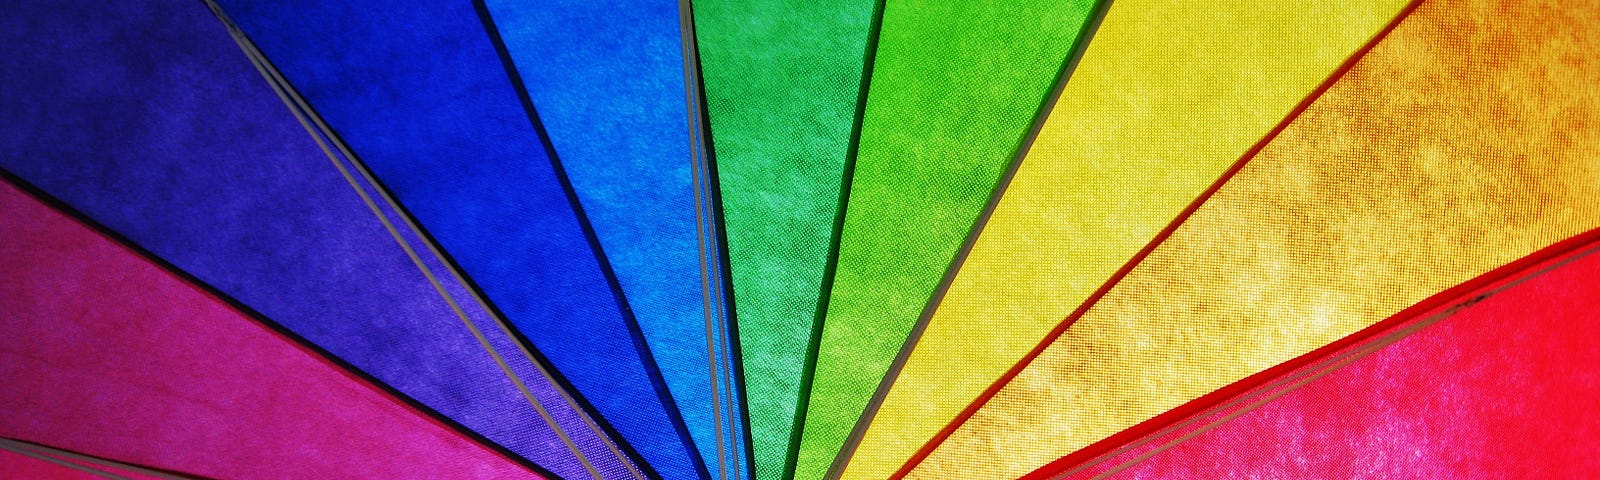 Inside of rainbow umbrella with sun shining through it